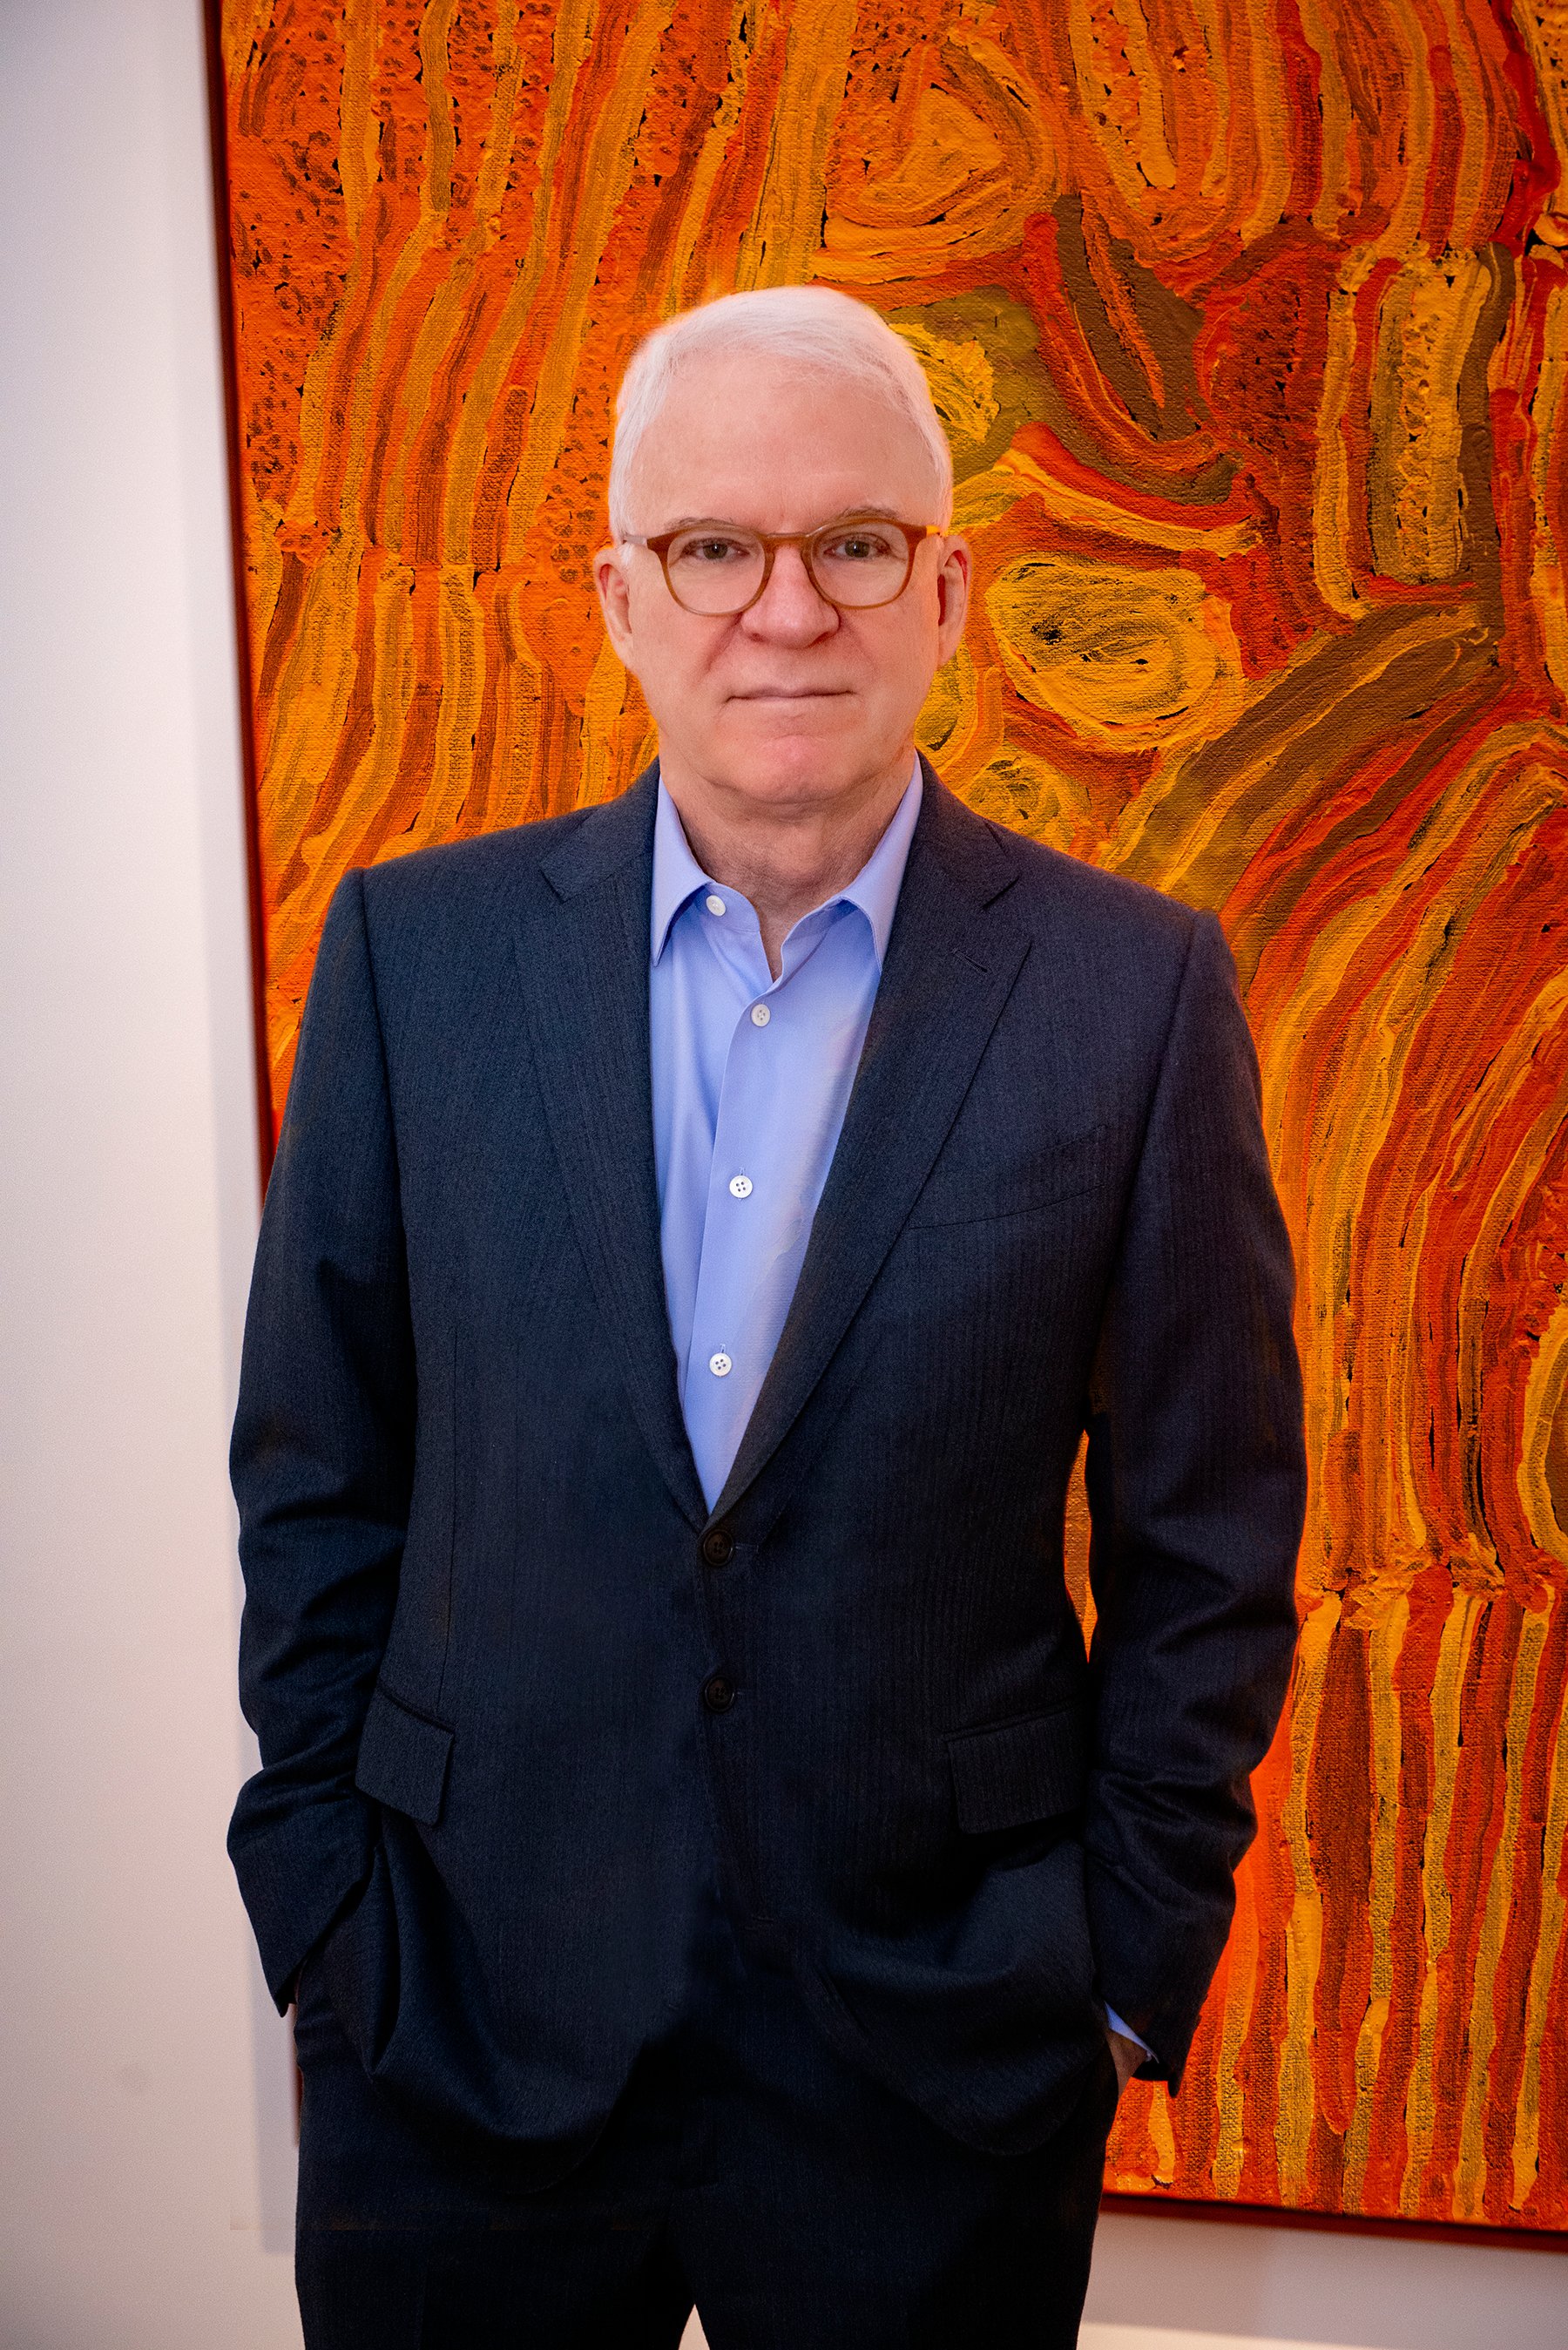 Actor Steve Martin Amassed a Stellar Collection of Australian Aboriginal Art at Warp ...